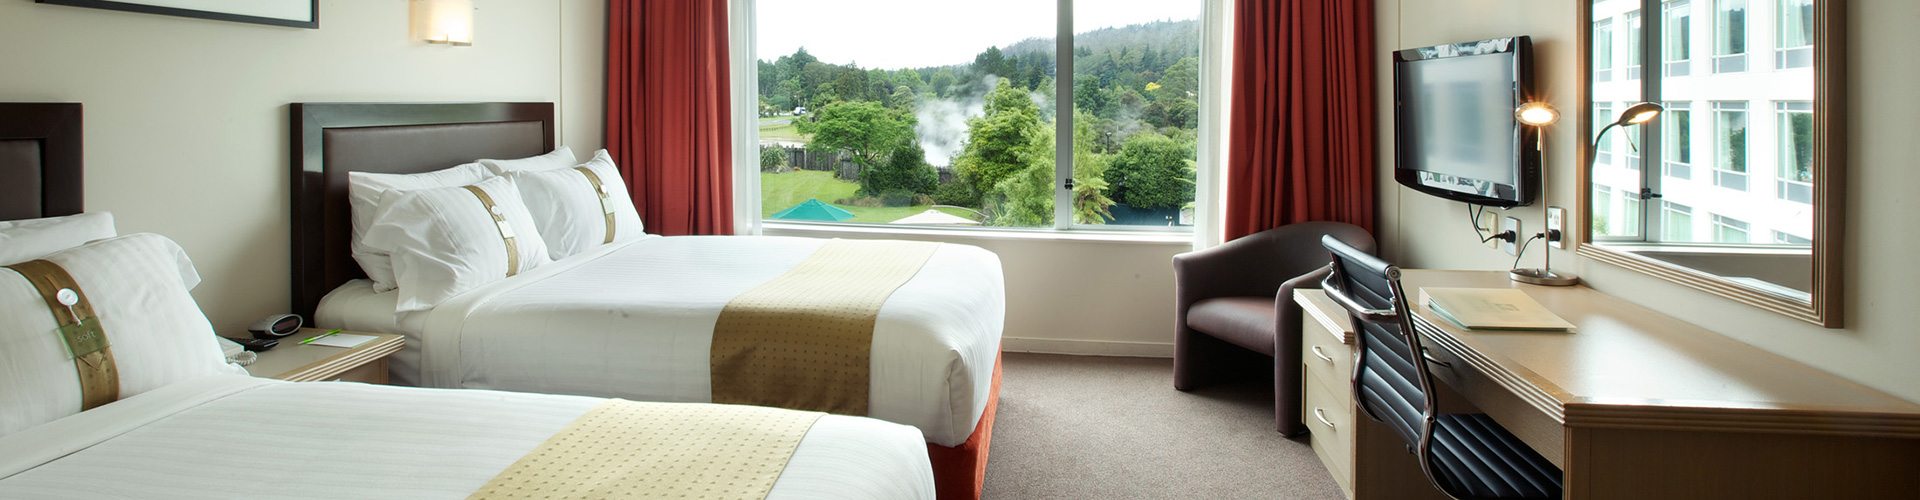 Standard Hotel Room Rotorua